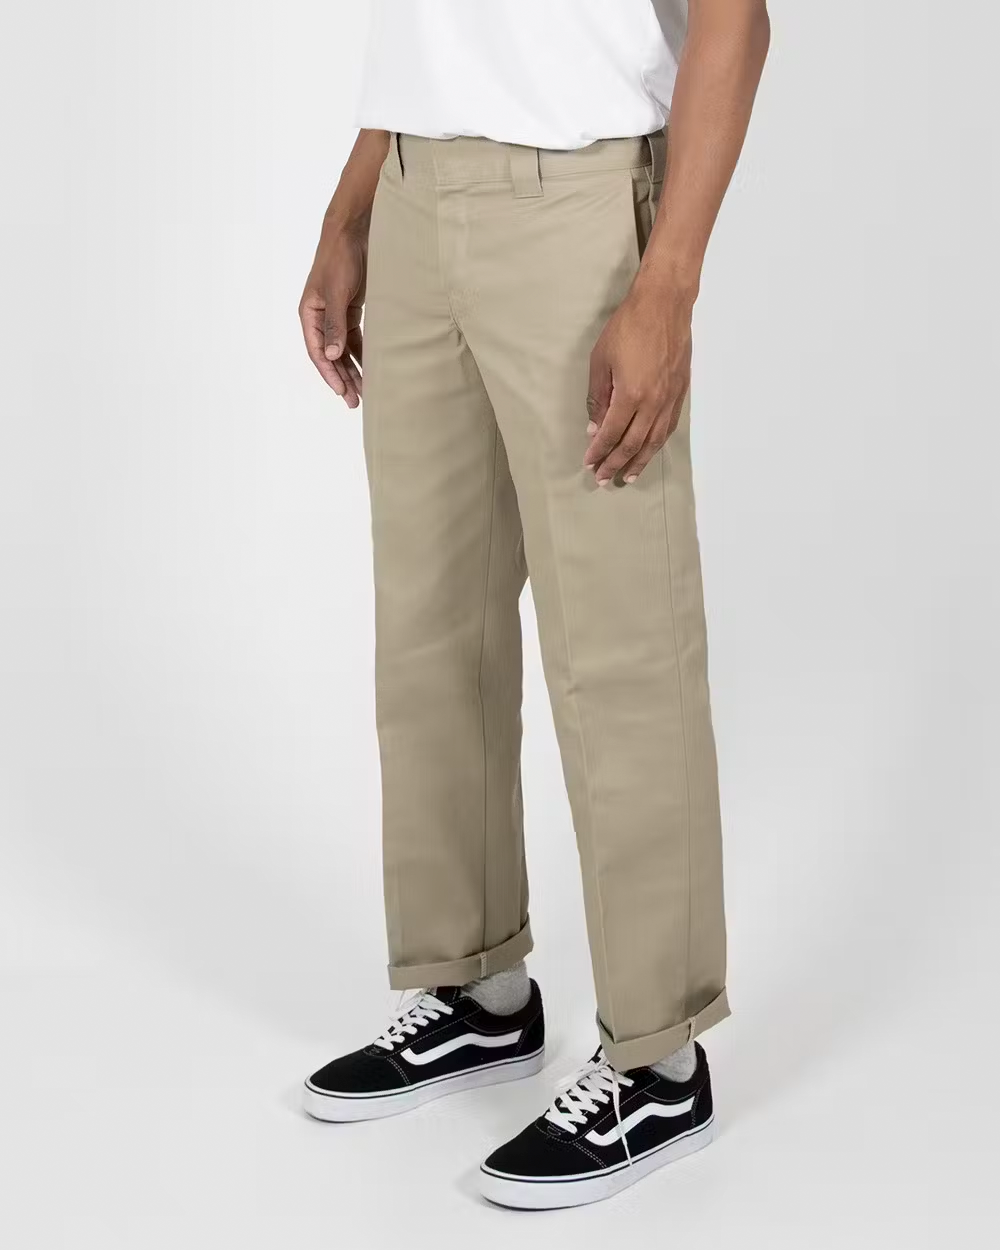 DICKIES 873 Slim Straight Fit Pants - Khaki - VENUE.